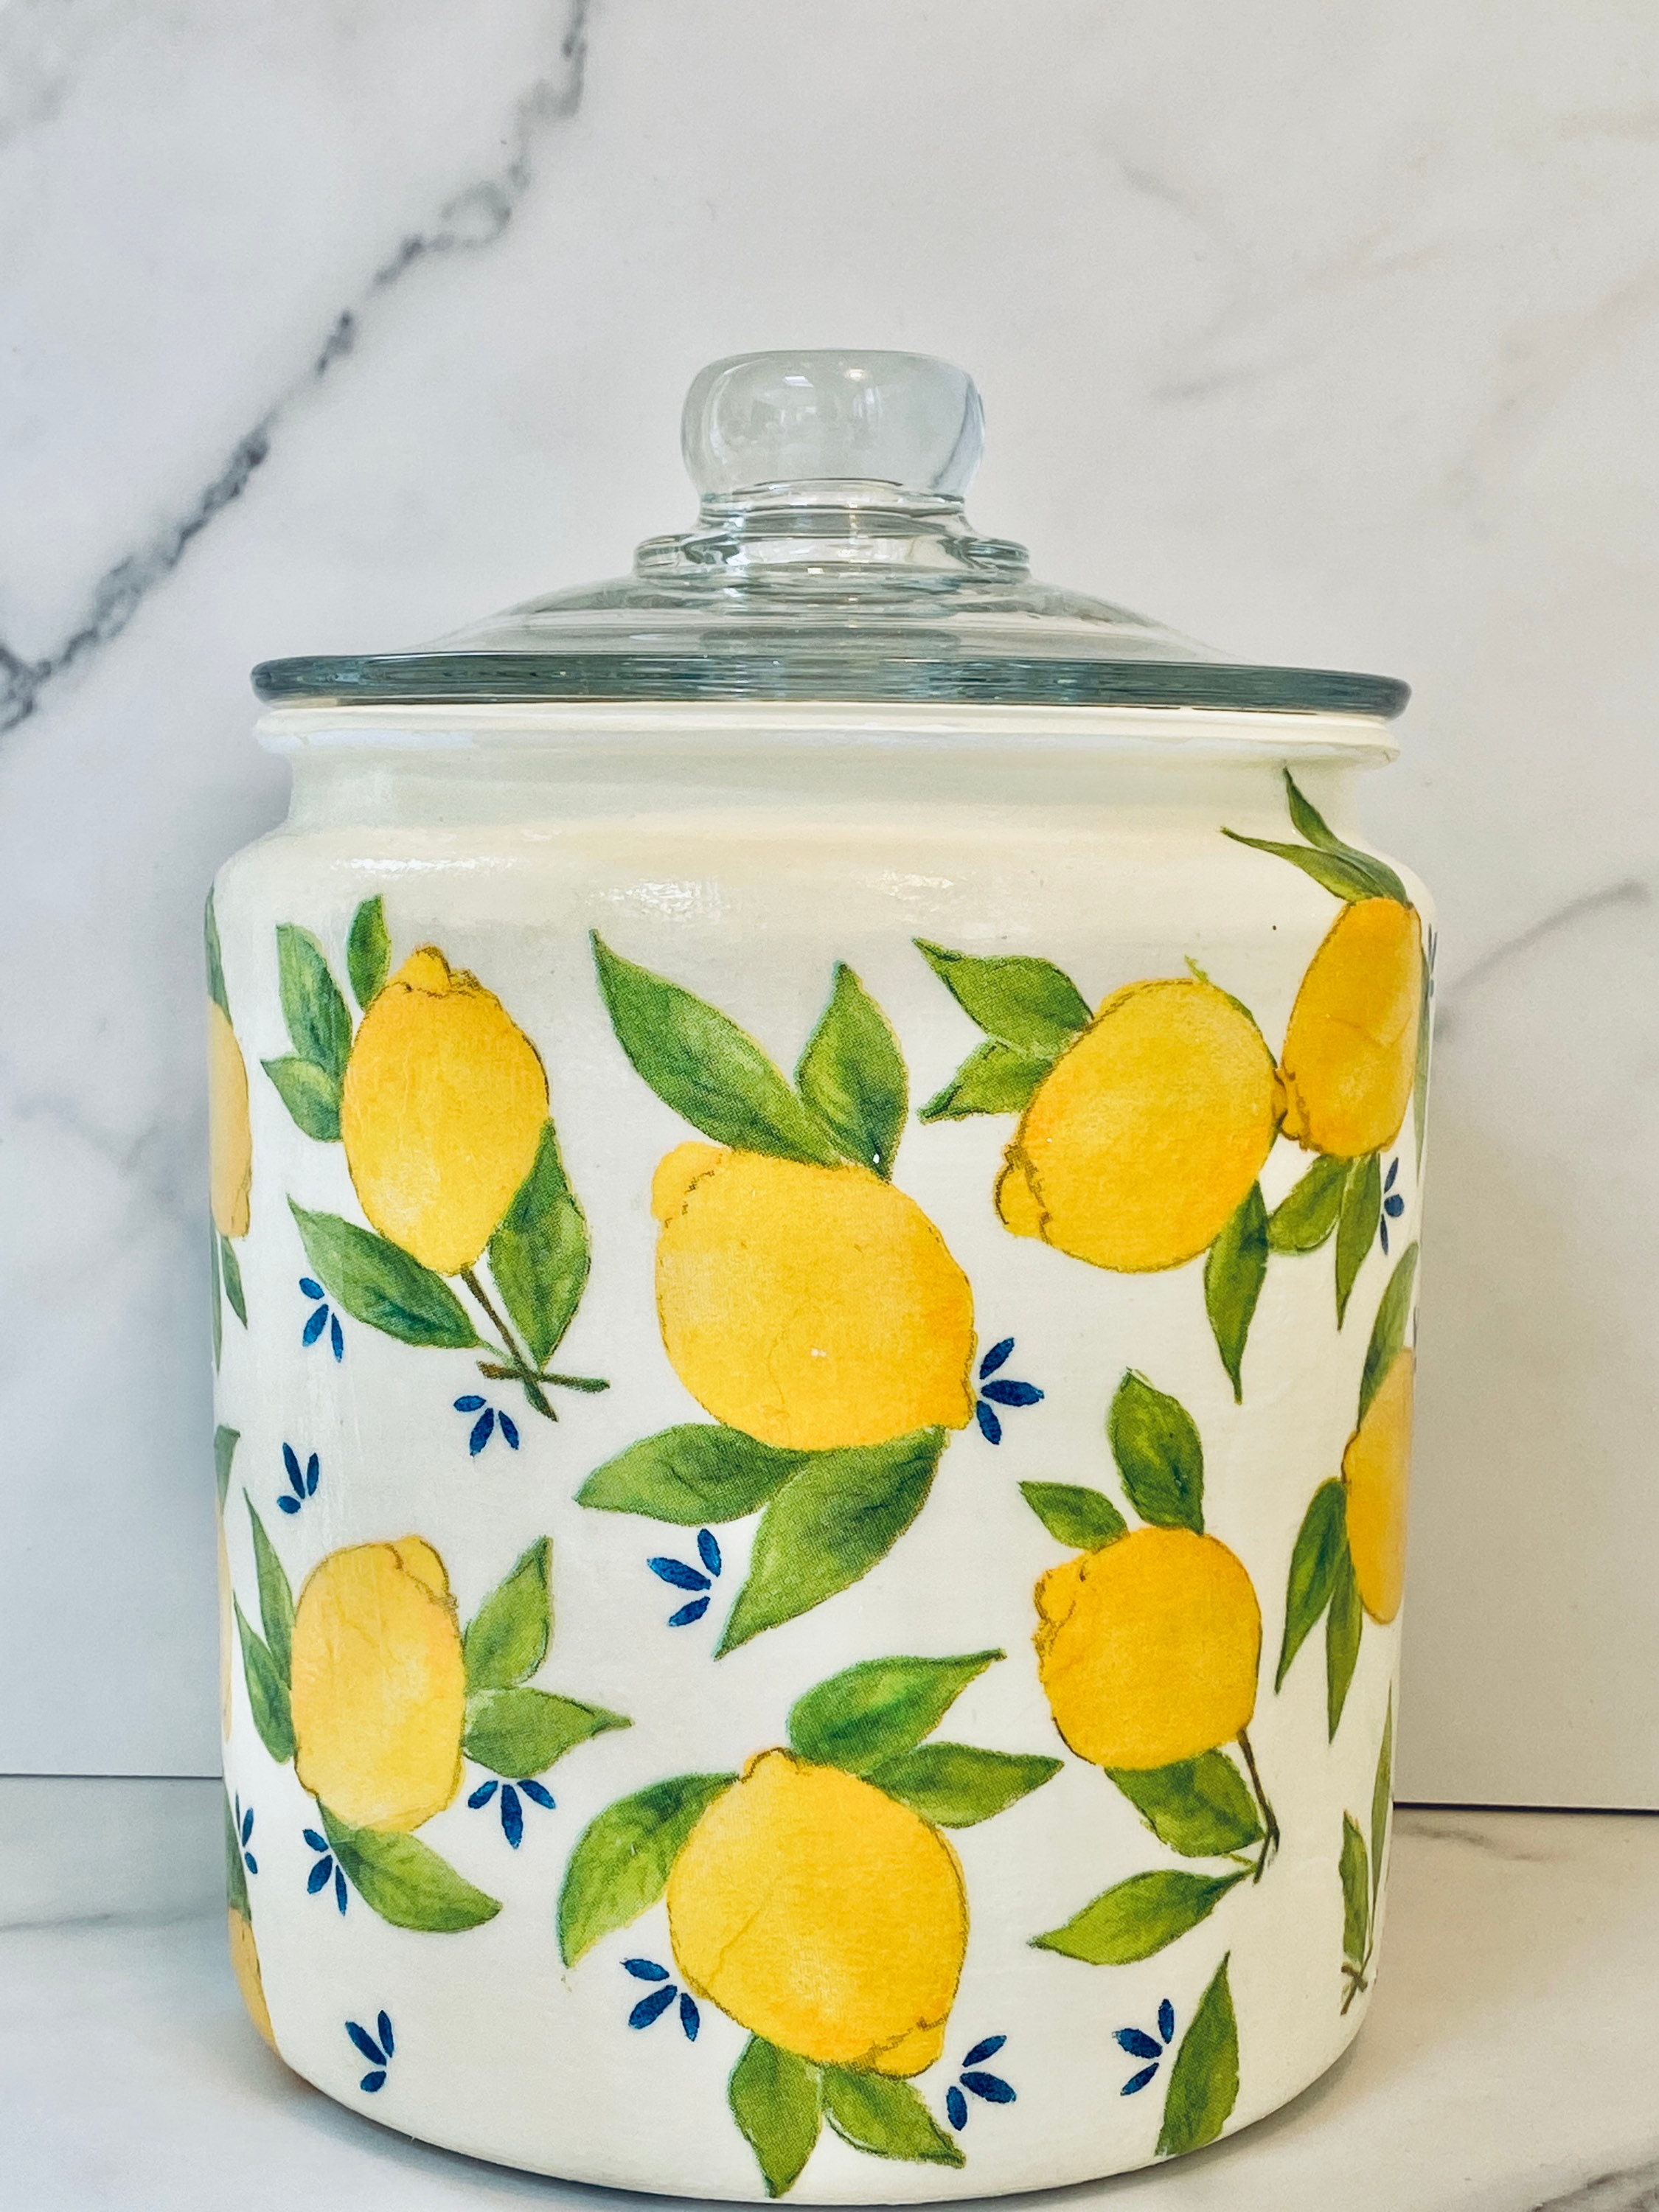 20 Brilliant Pantry Organization Ideas - Jar Of Lemons